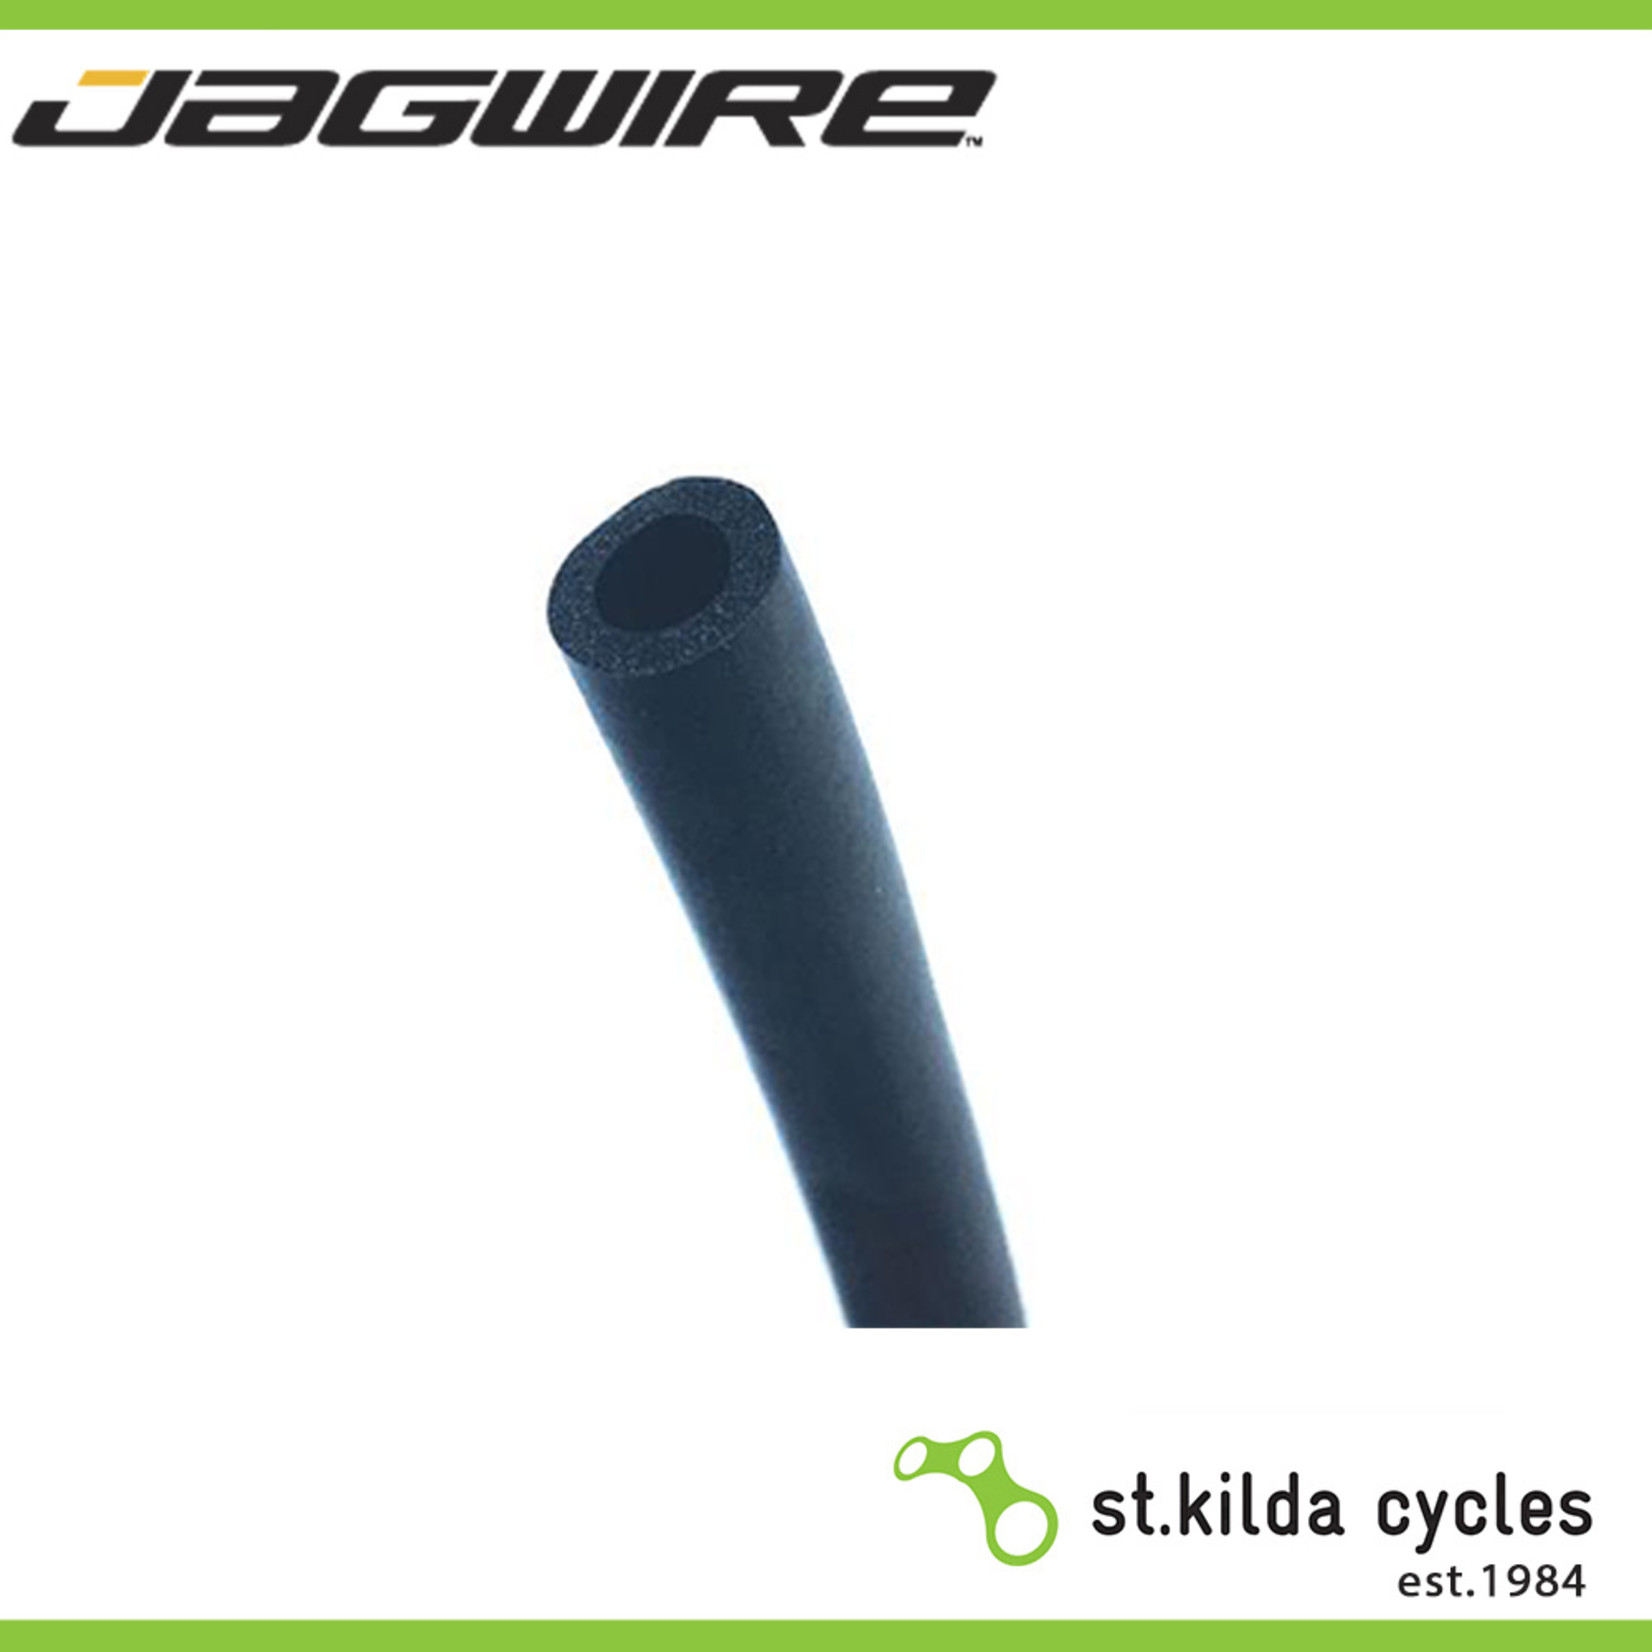 Jagwire Jagwire Brake Cable Internal Housing Dampener - Foam - 10m - Black